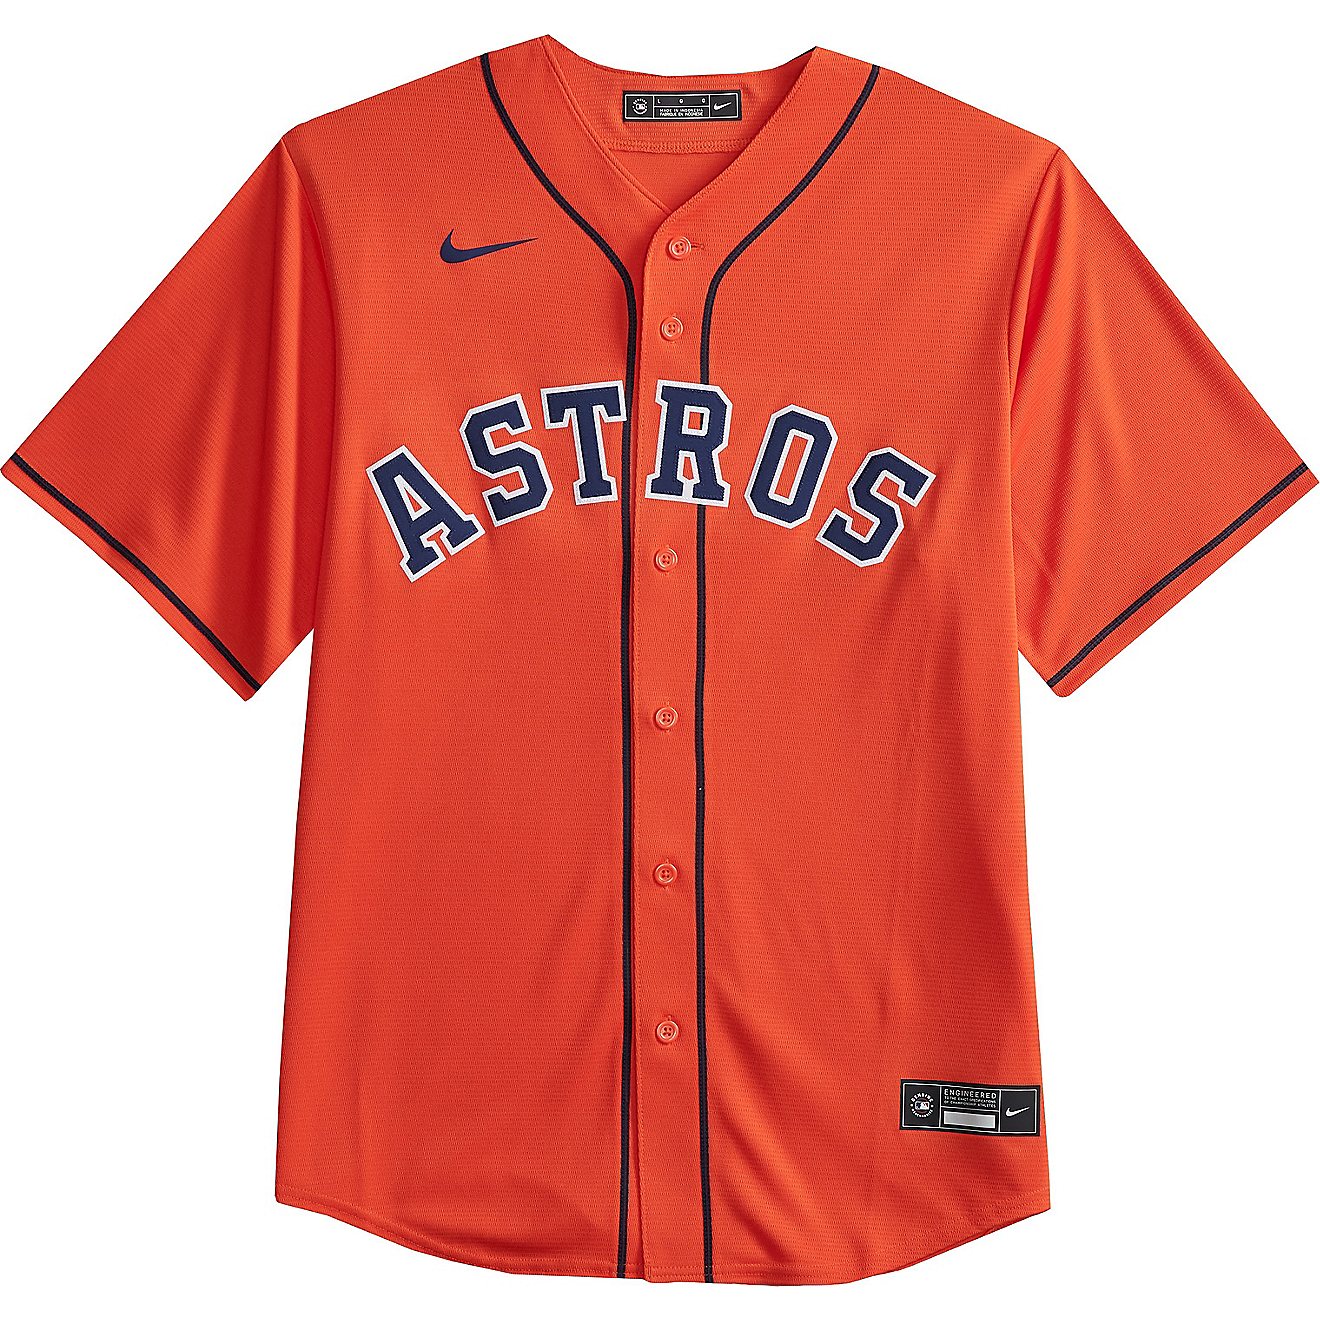 orange astros jersey